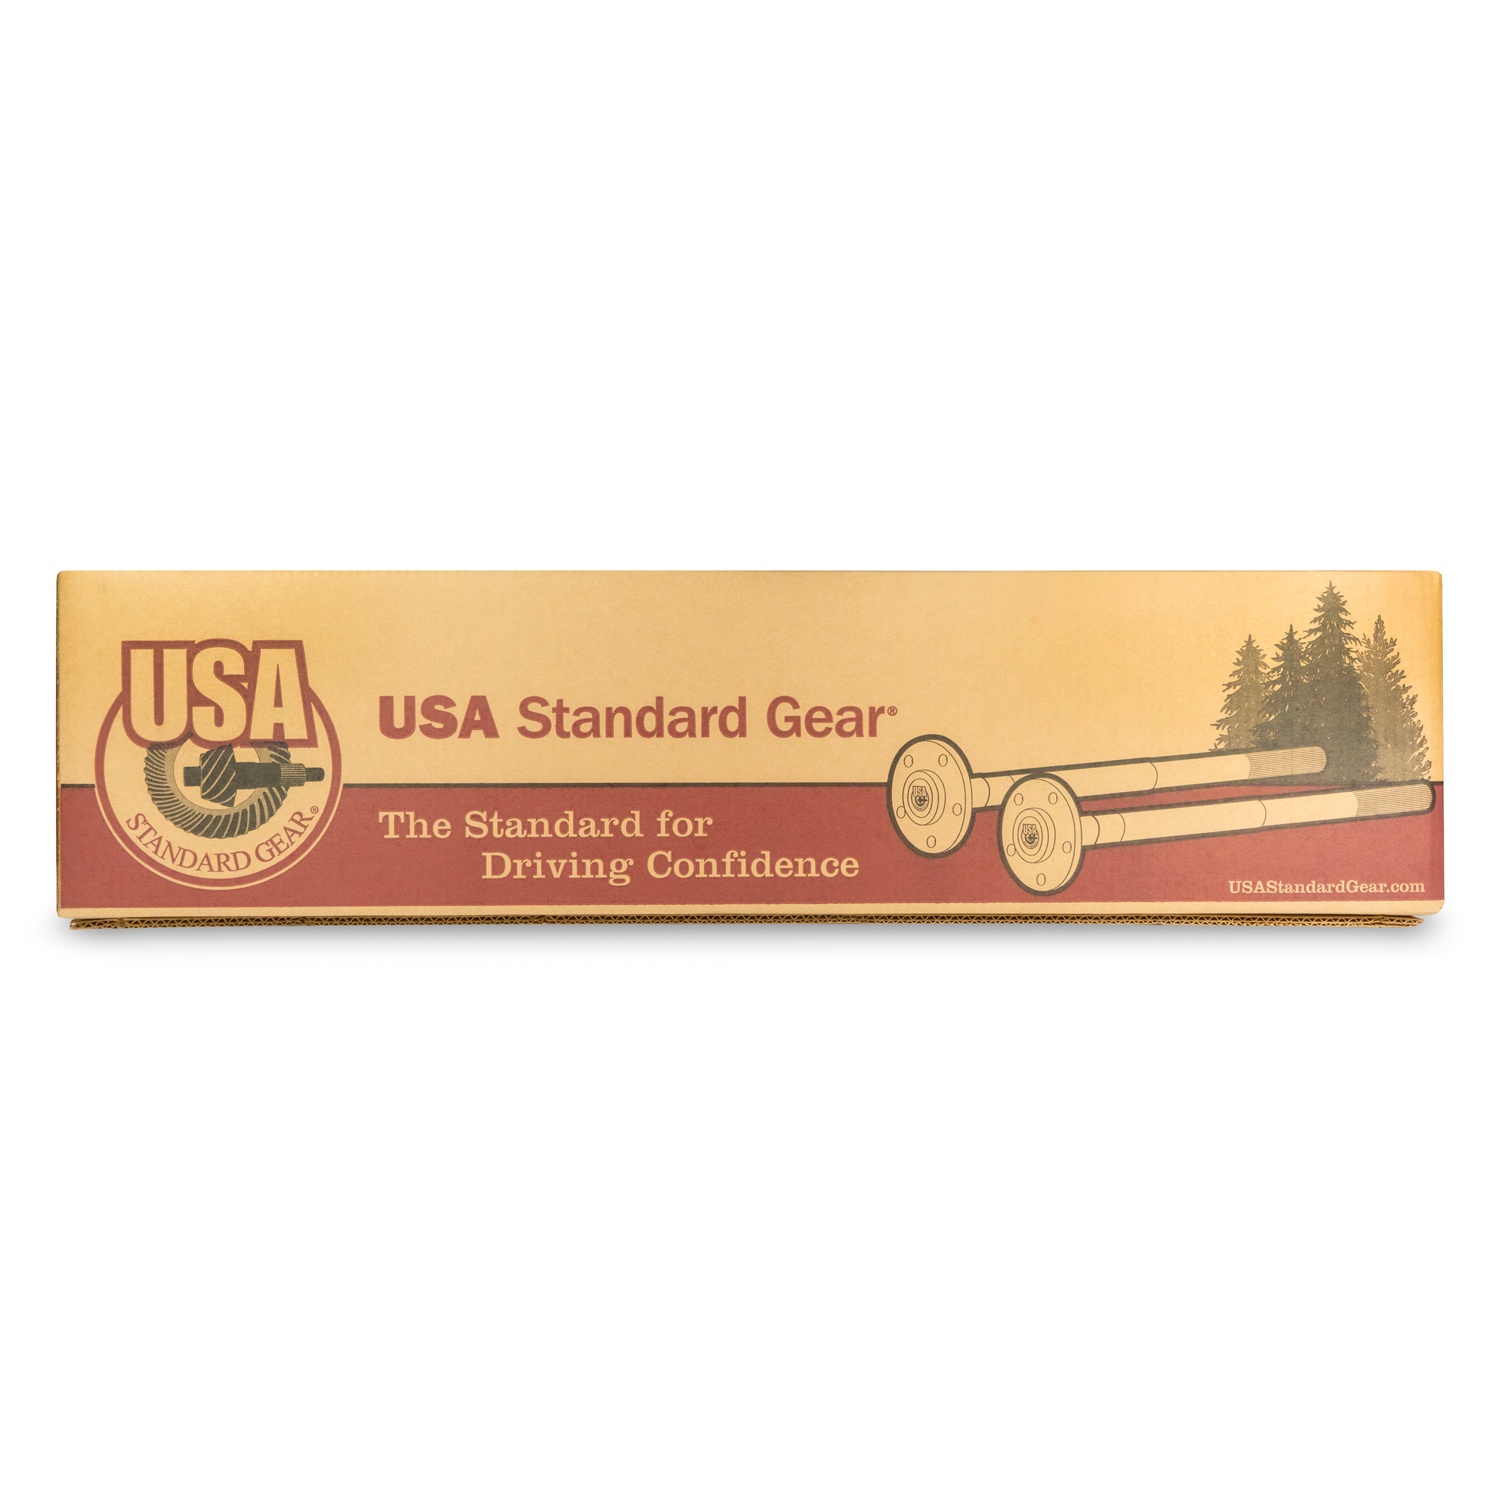 USA Standard Gear Chromoly Outer Front Axle for Dana 44, 19 Spline, 9.72” Long